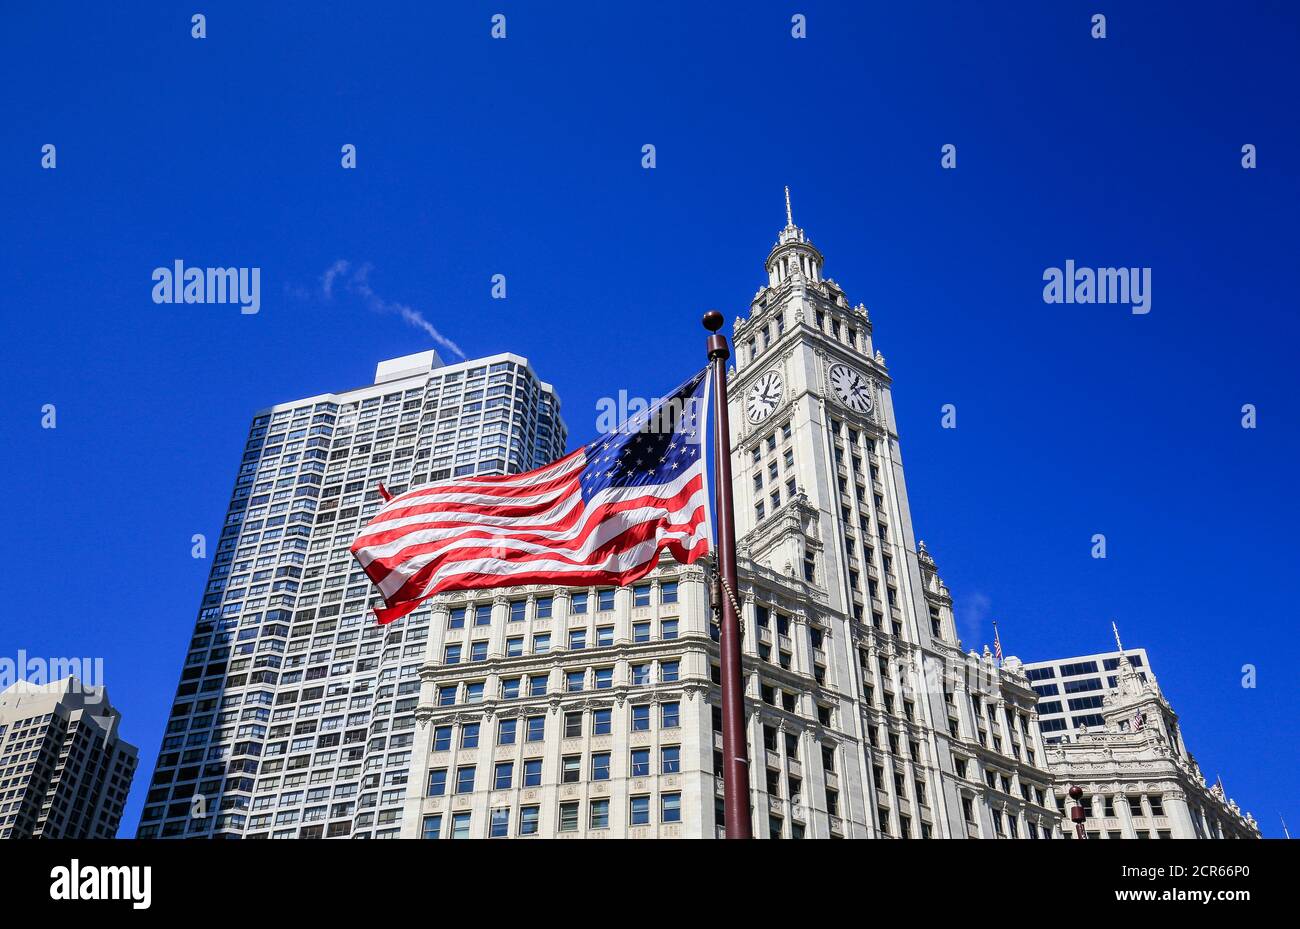 Amerikanische Flagge vor dem Wrigley Building, Chicago, Illinois, USA, Nordamerika Stockfoto